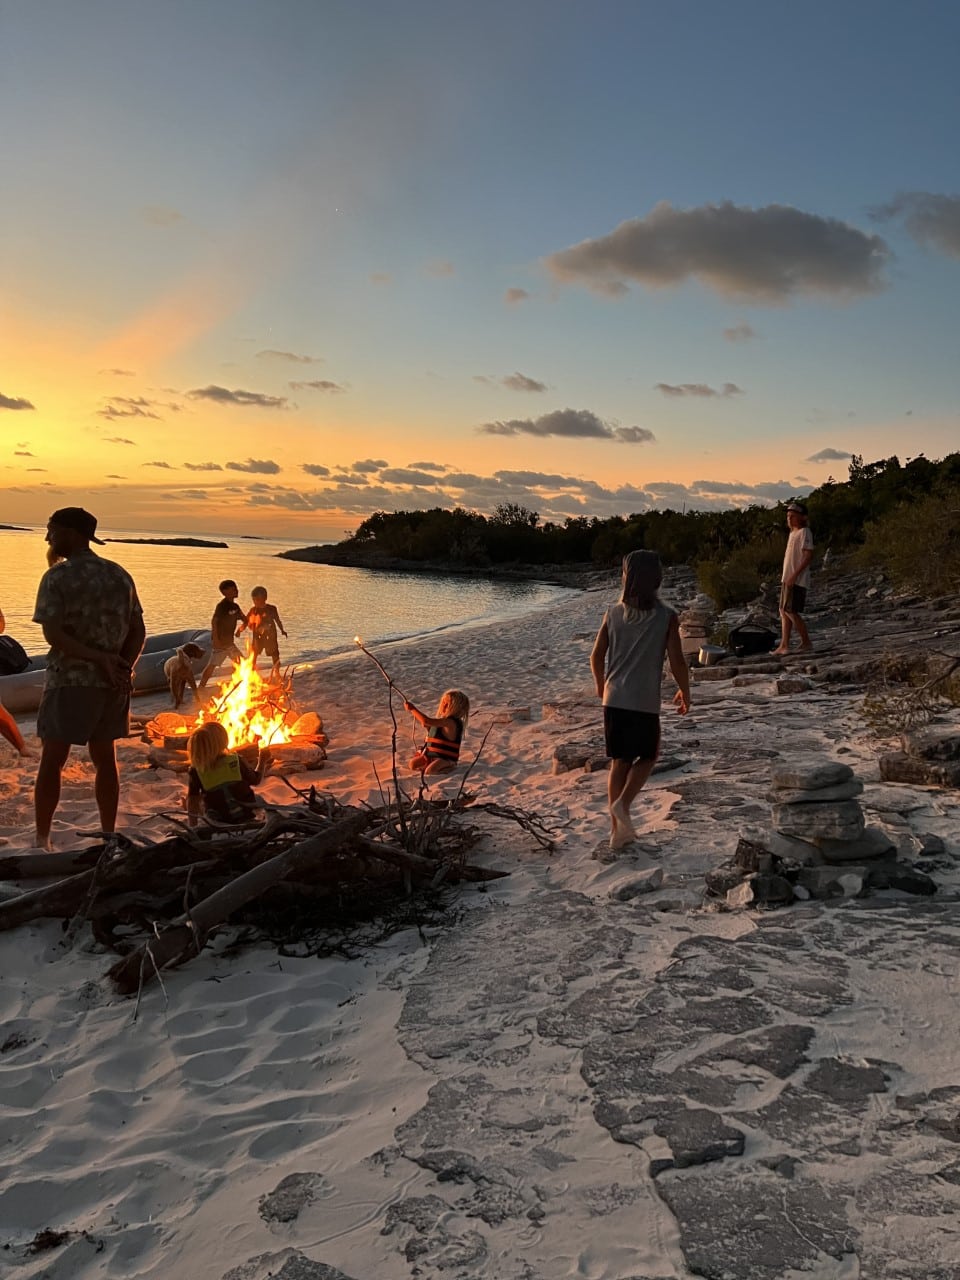 Chasing Zorba having a Bonfire on an Island